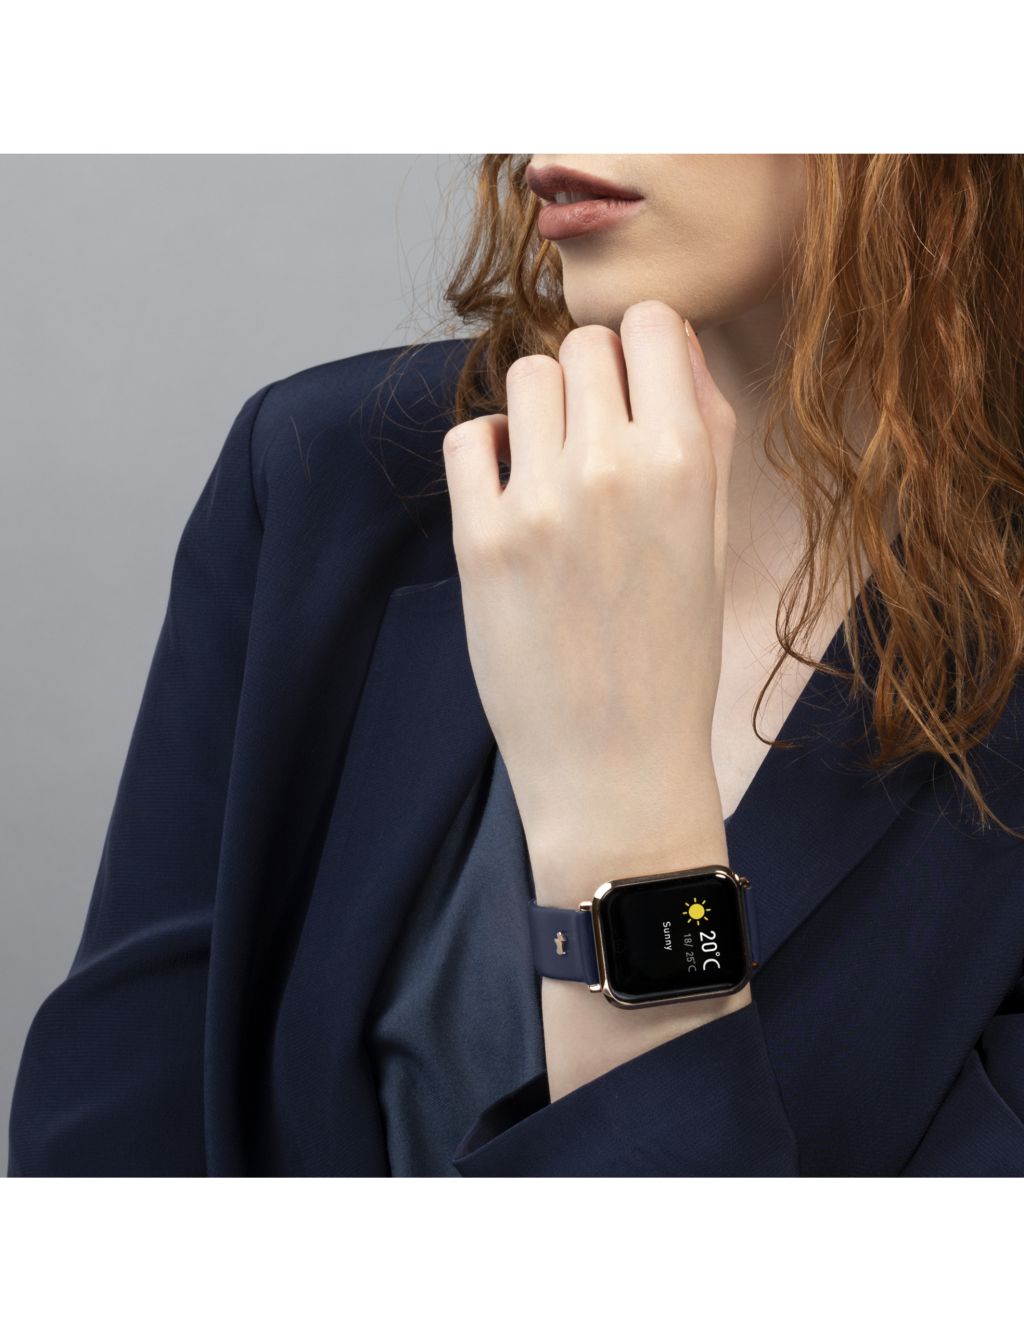 Radley Smart Series 6 Activity Tracker Leather Smartwatch image 3